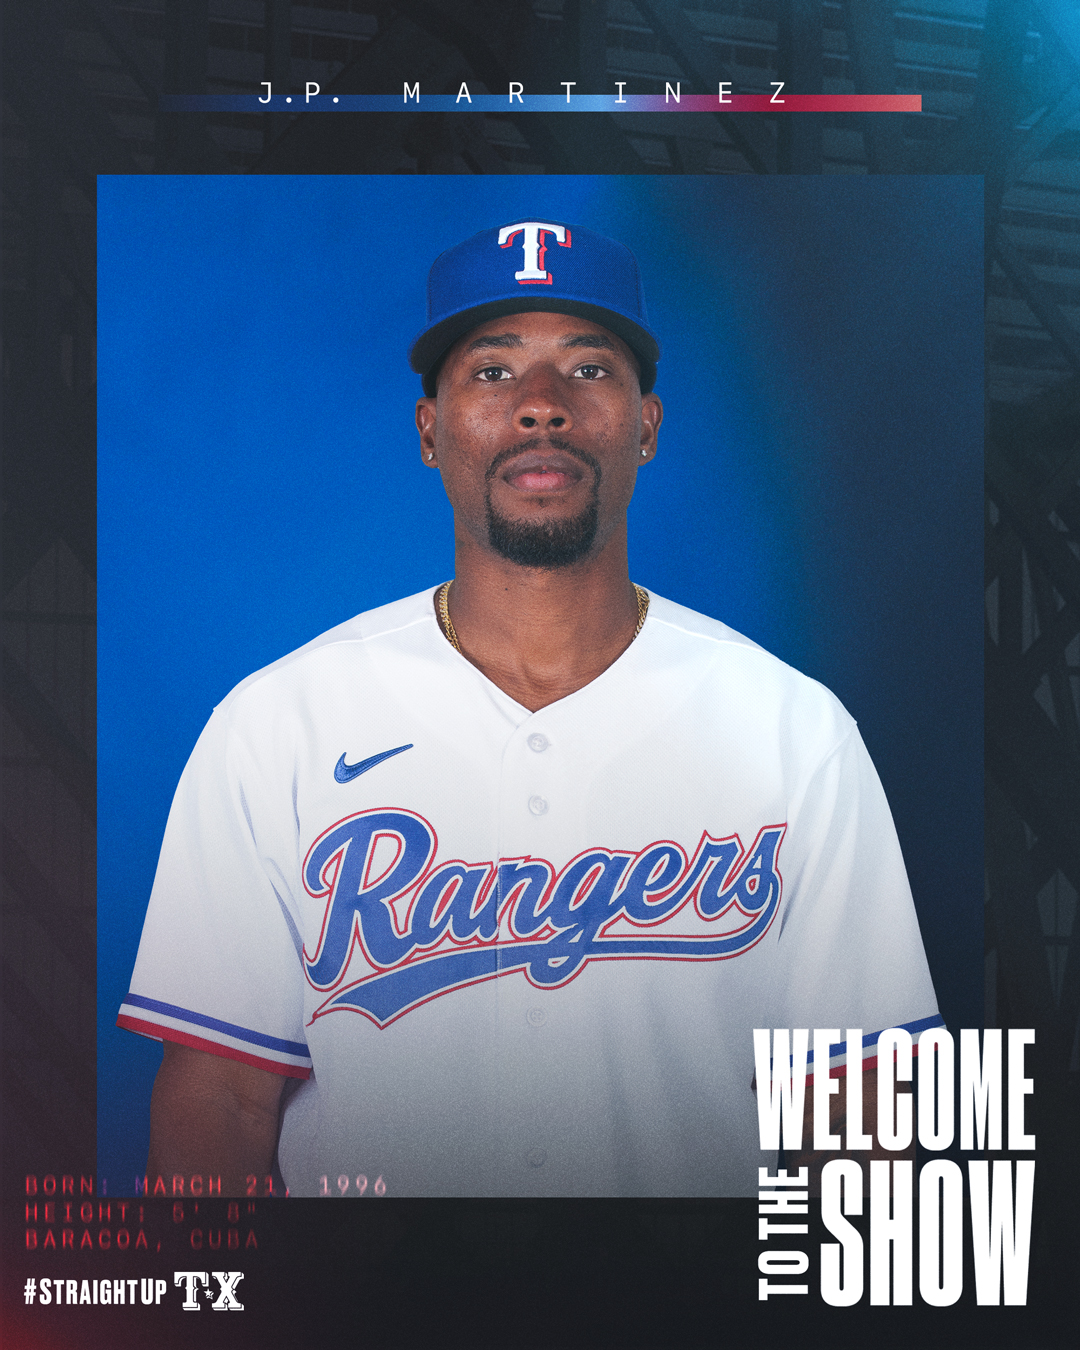 Texas Rangers - Texas Rangers added a new photo.